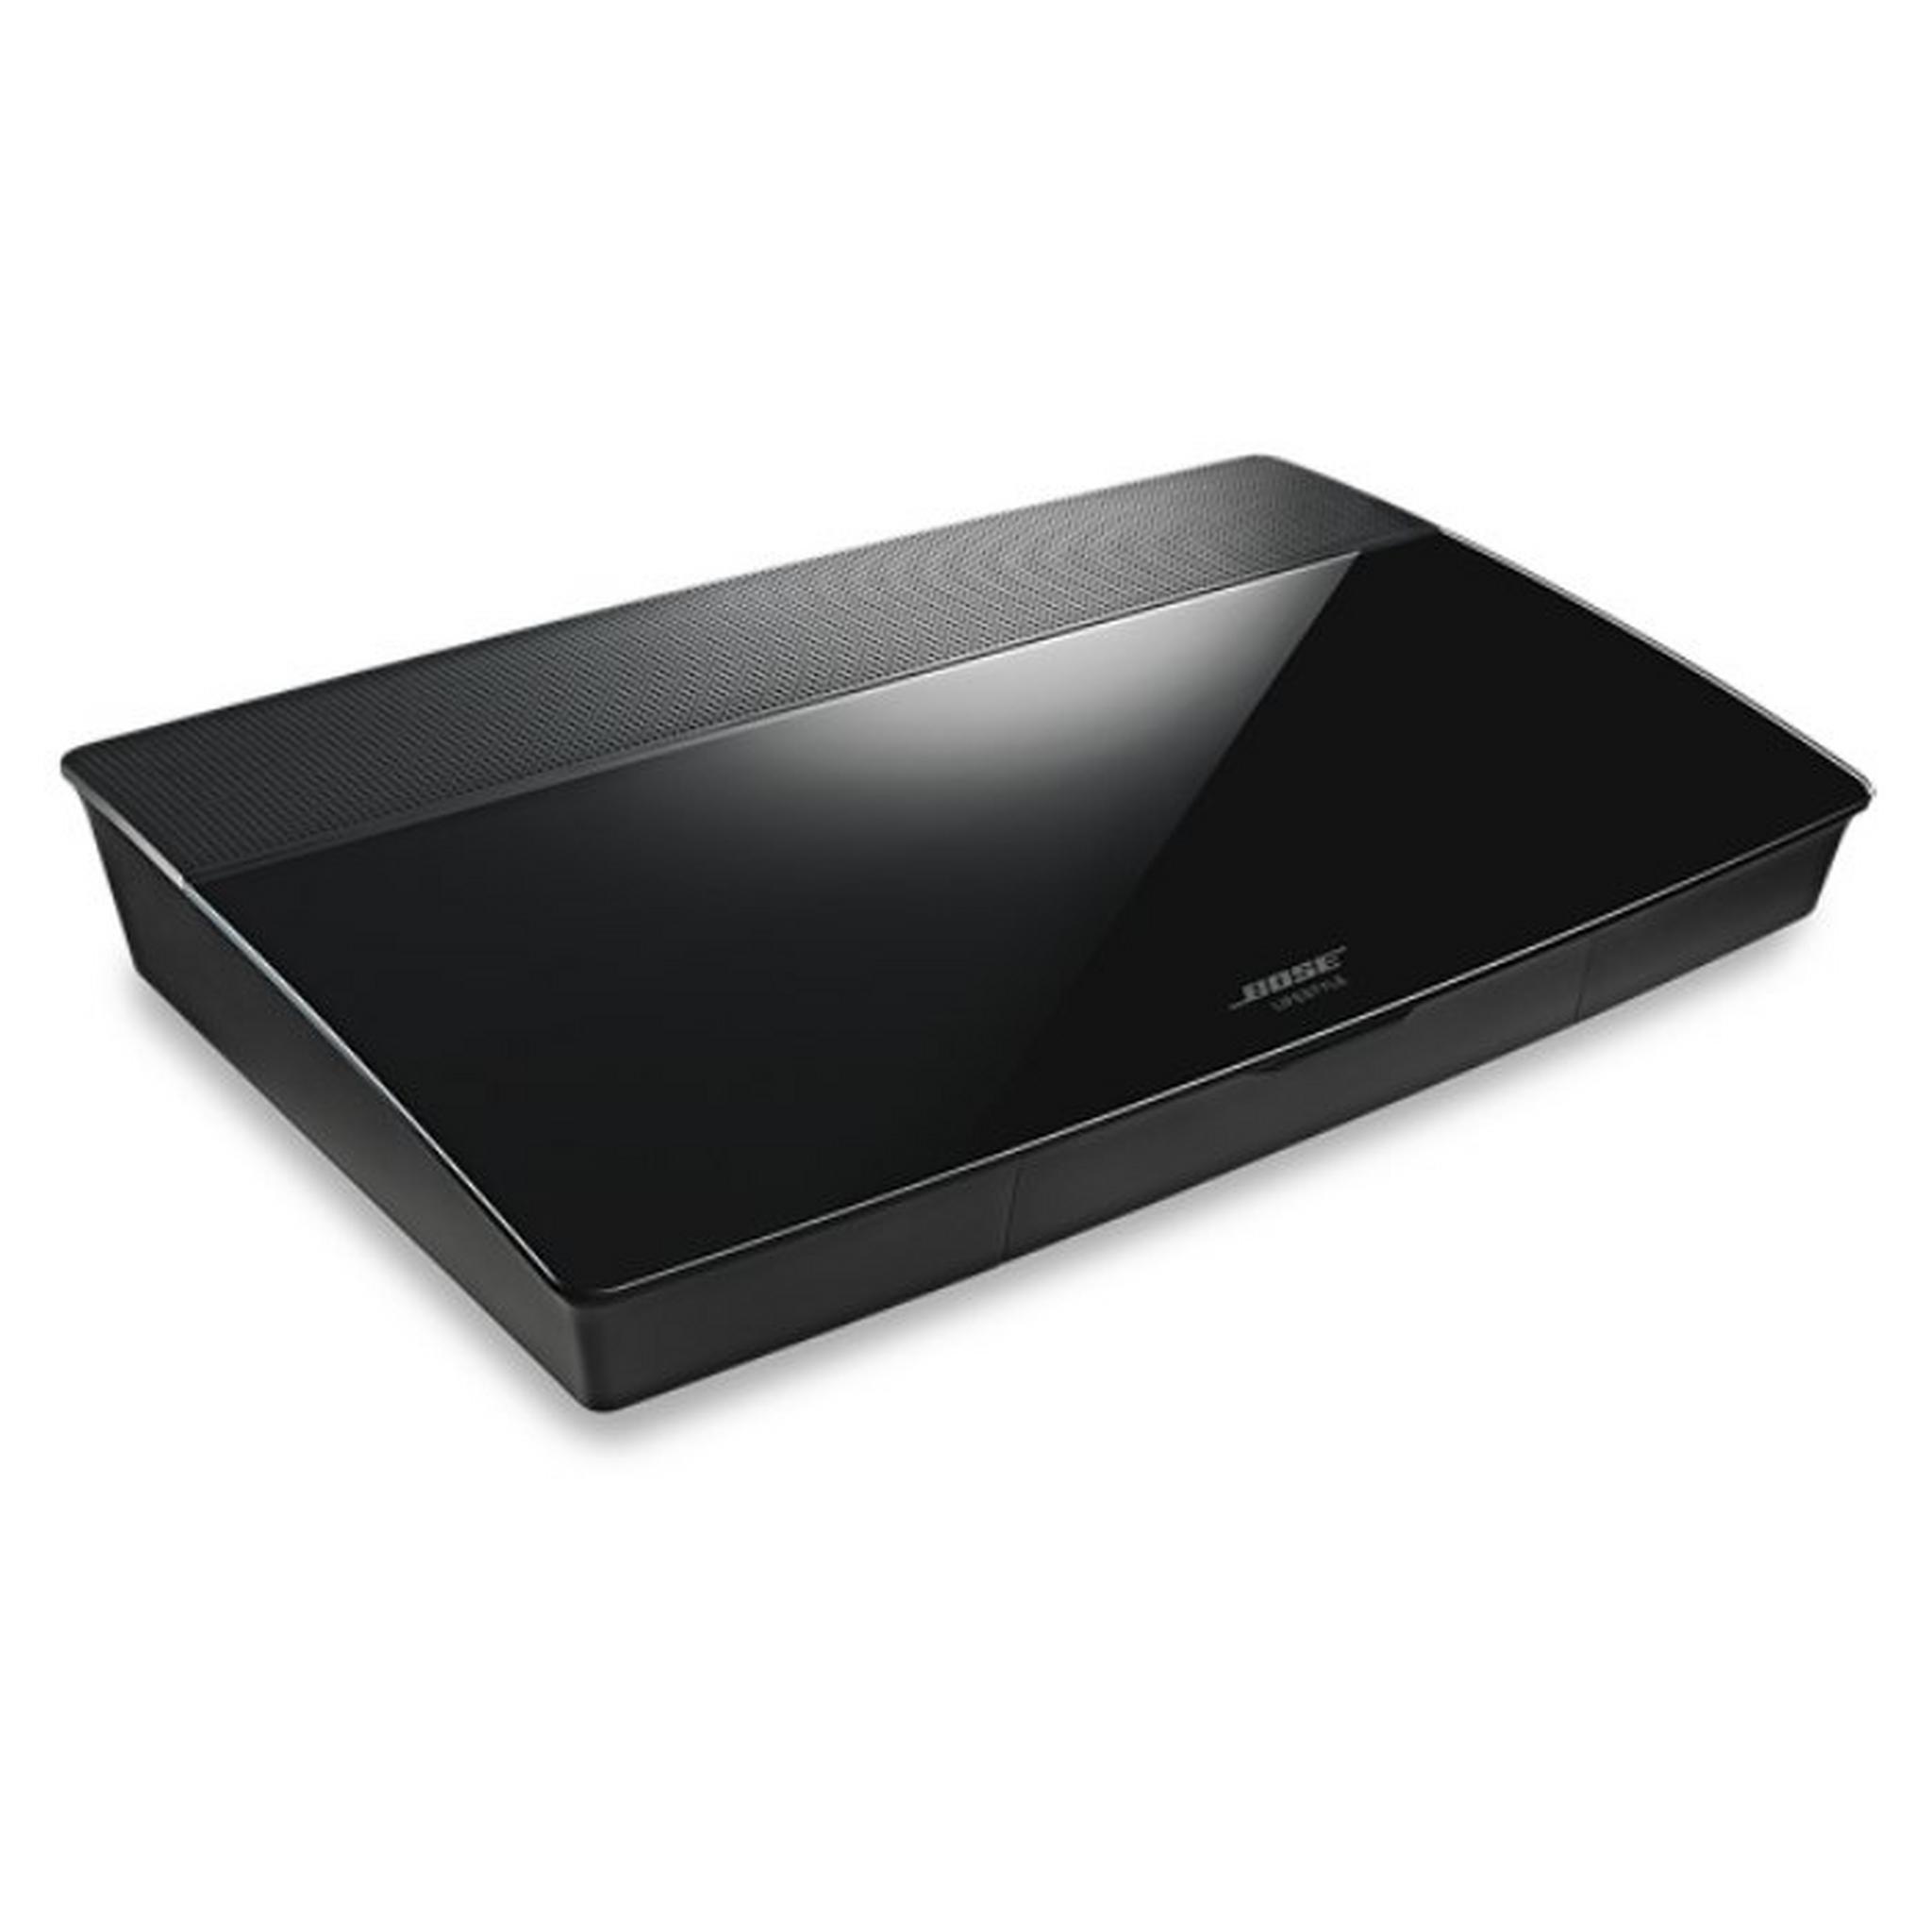 Bose Lifestyle 650 home entertainment system - Black